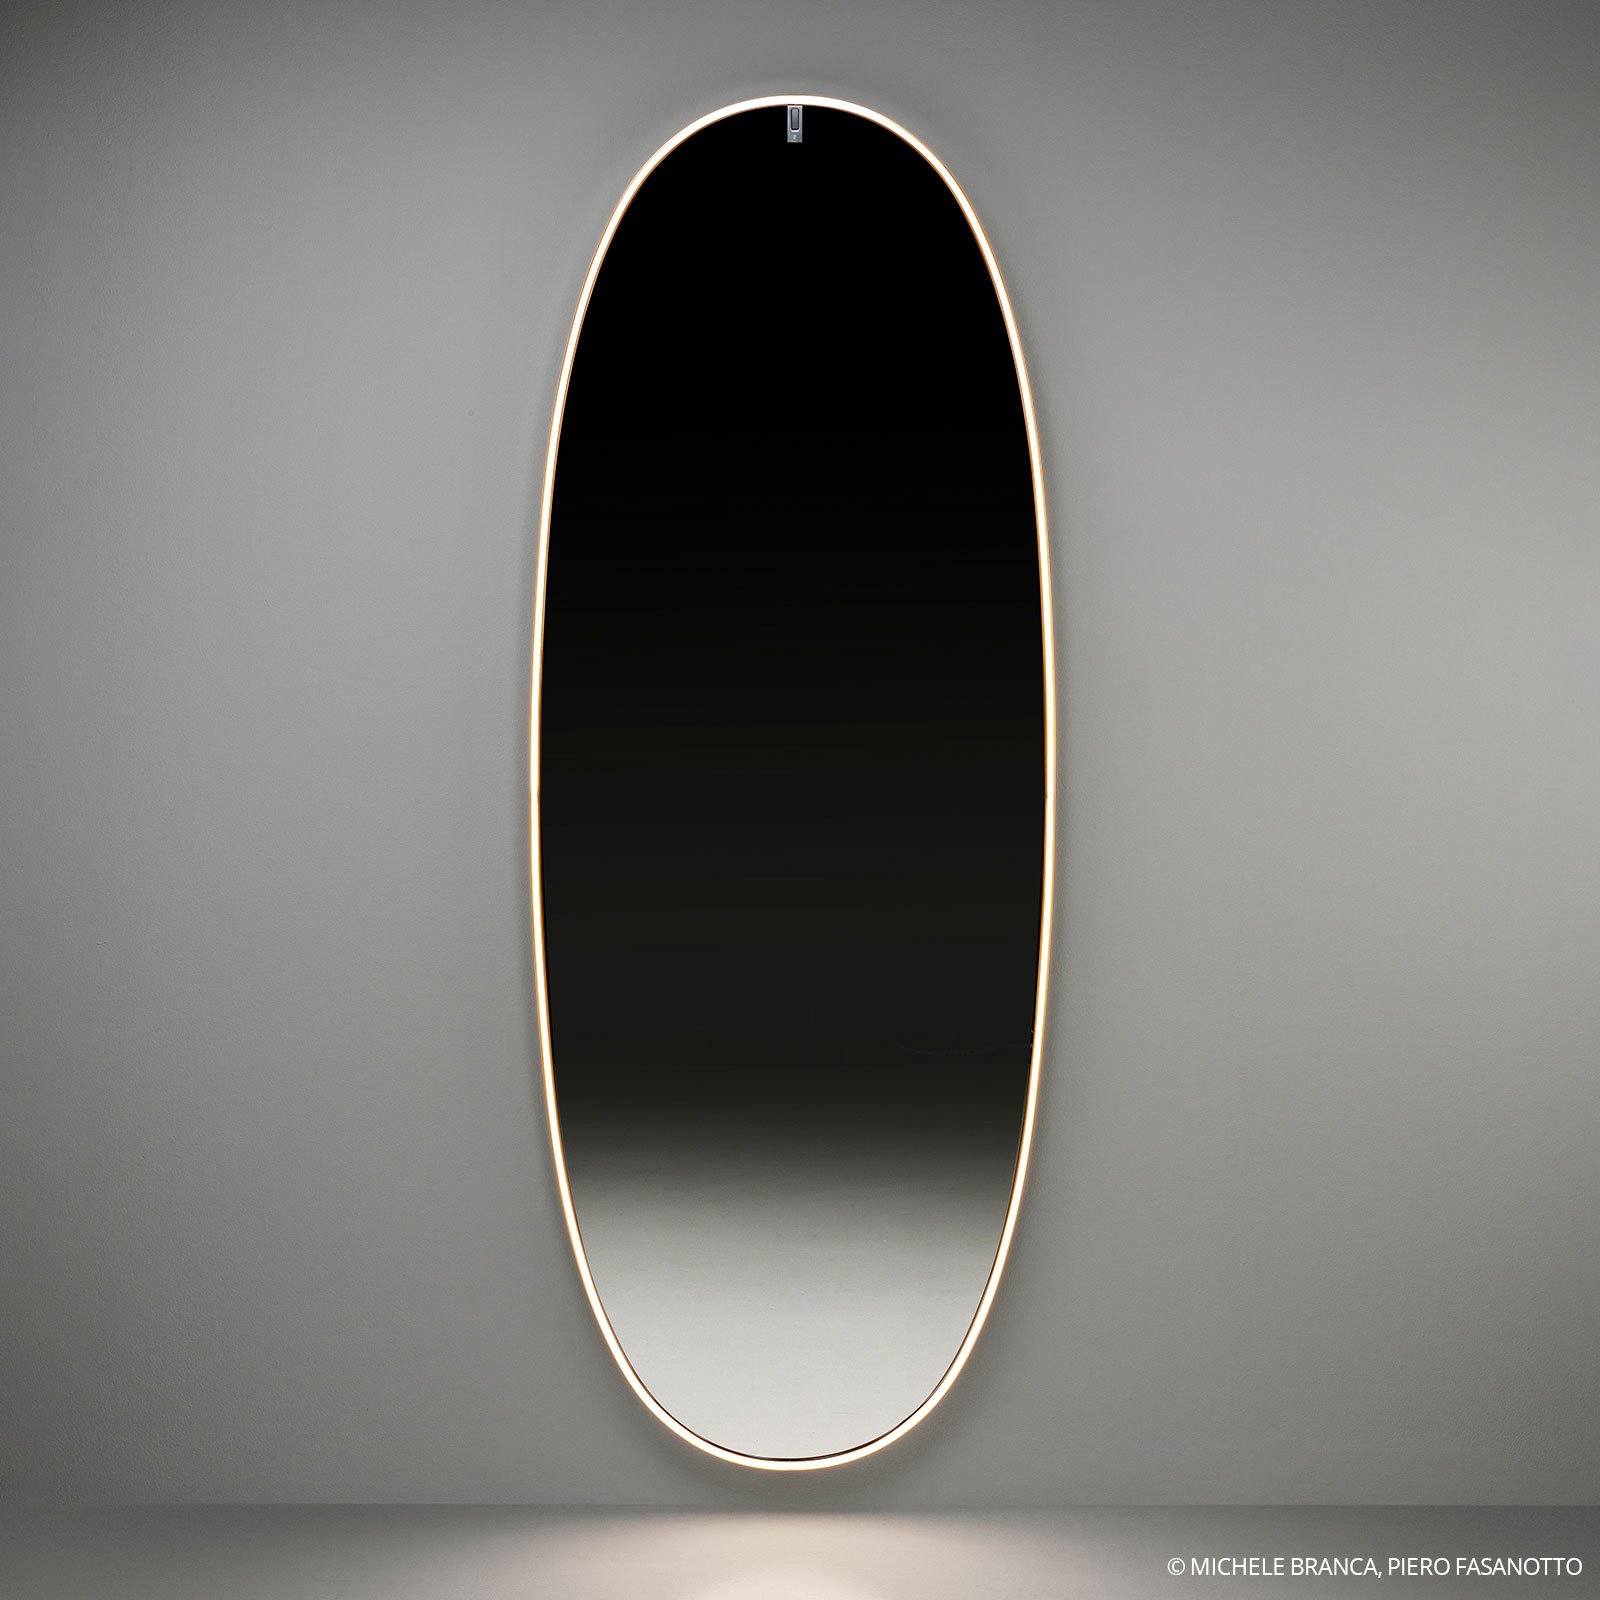 FLOS La Plus Belle LED nástenné zrkadlo bronz